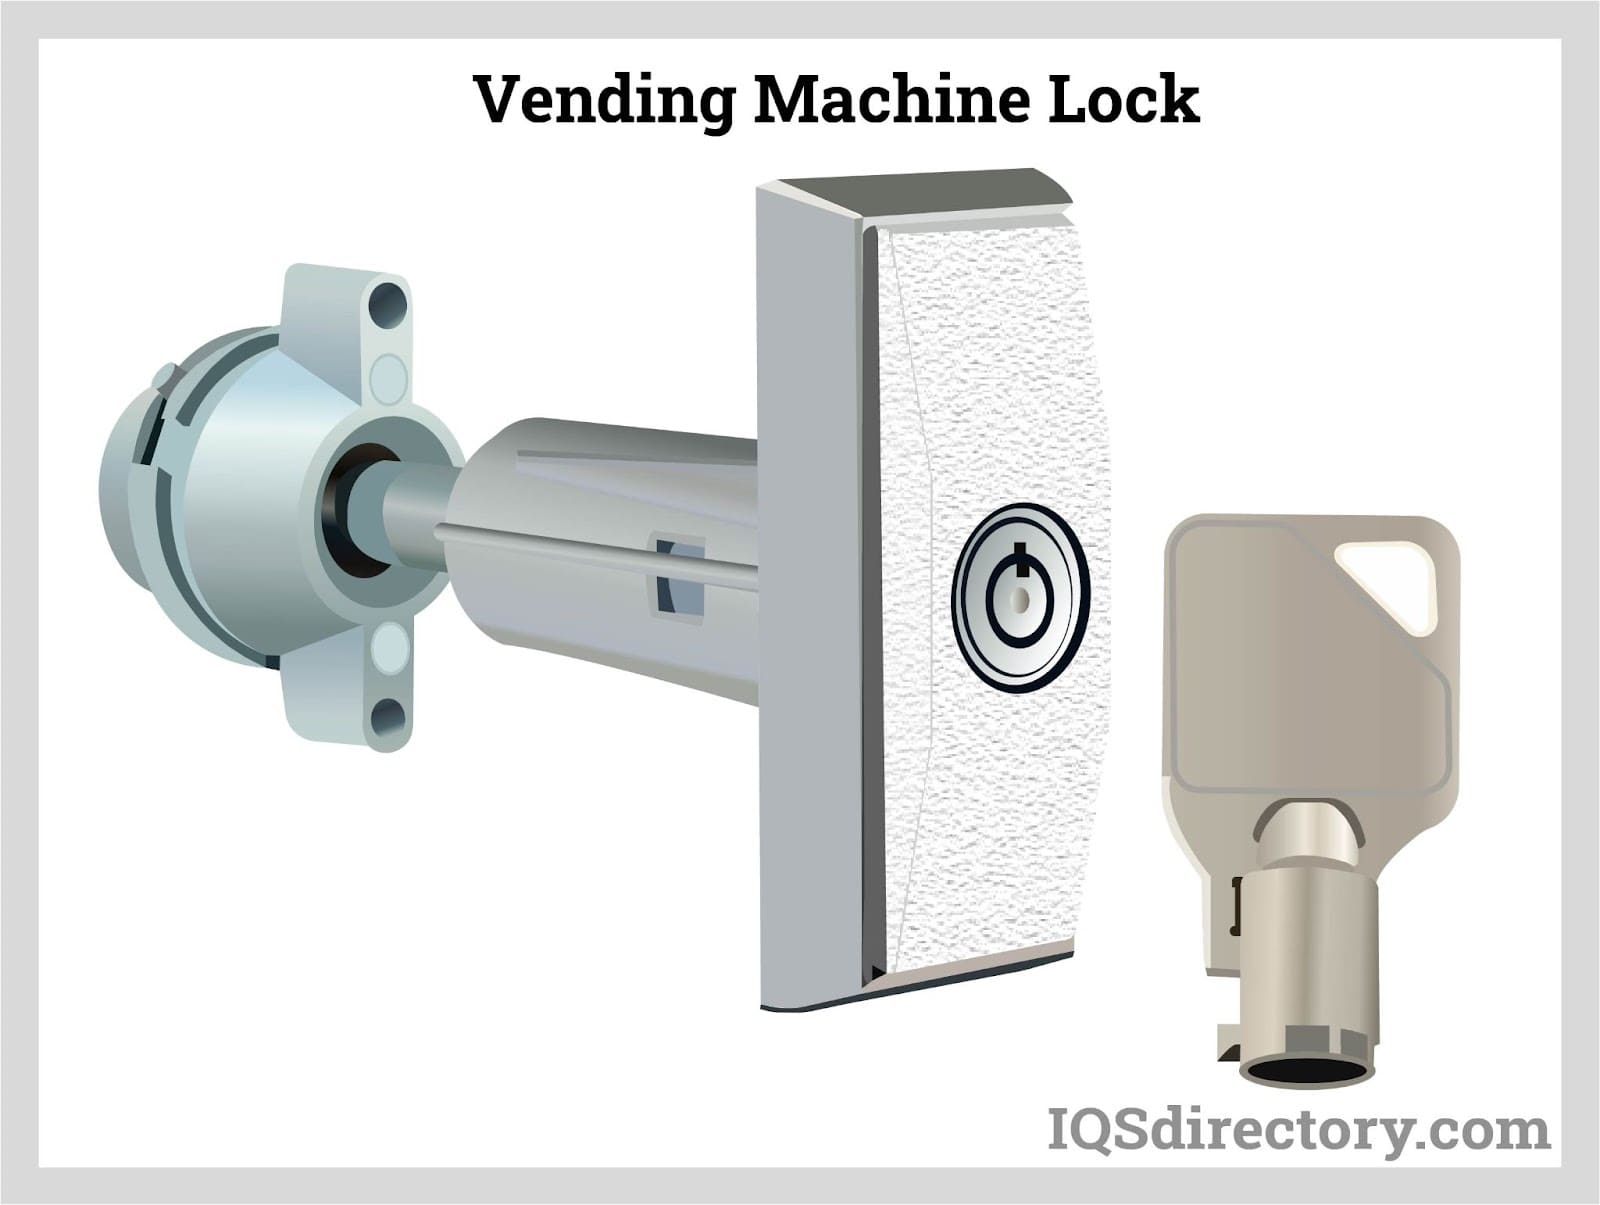 Vending Machine Lock